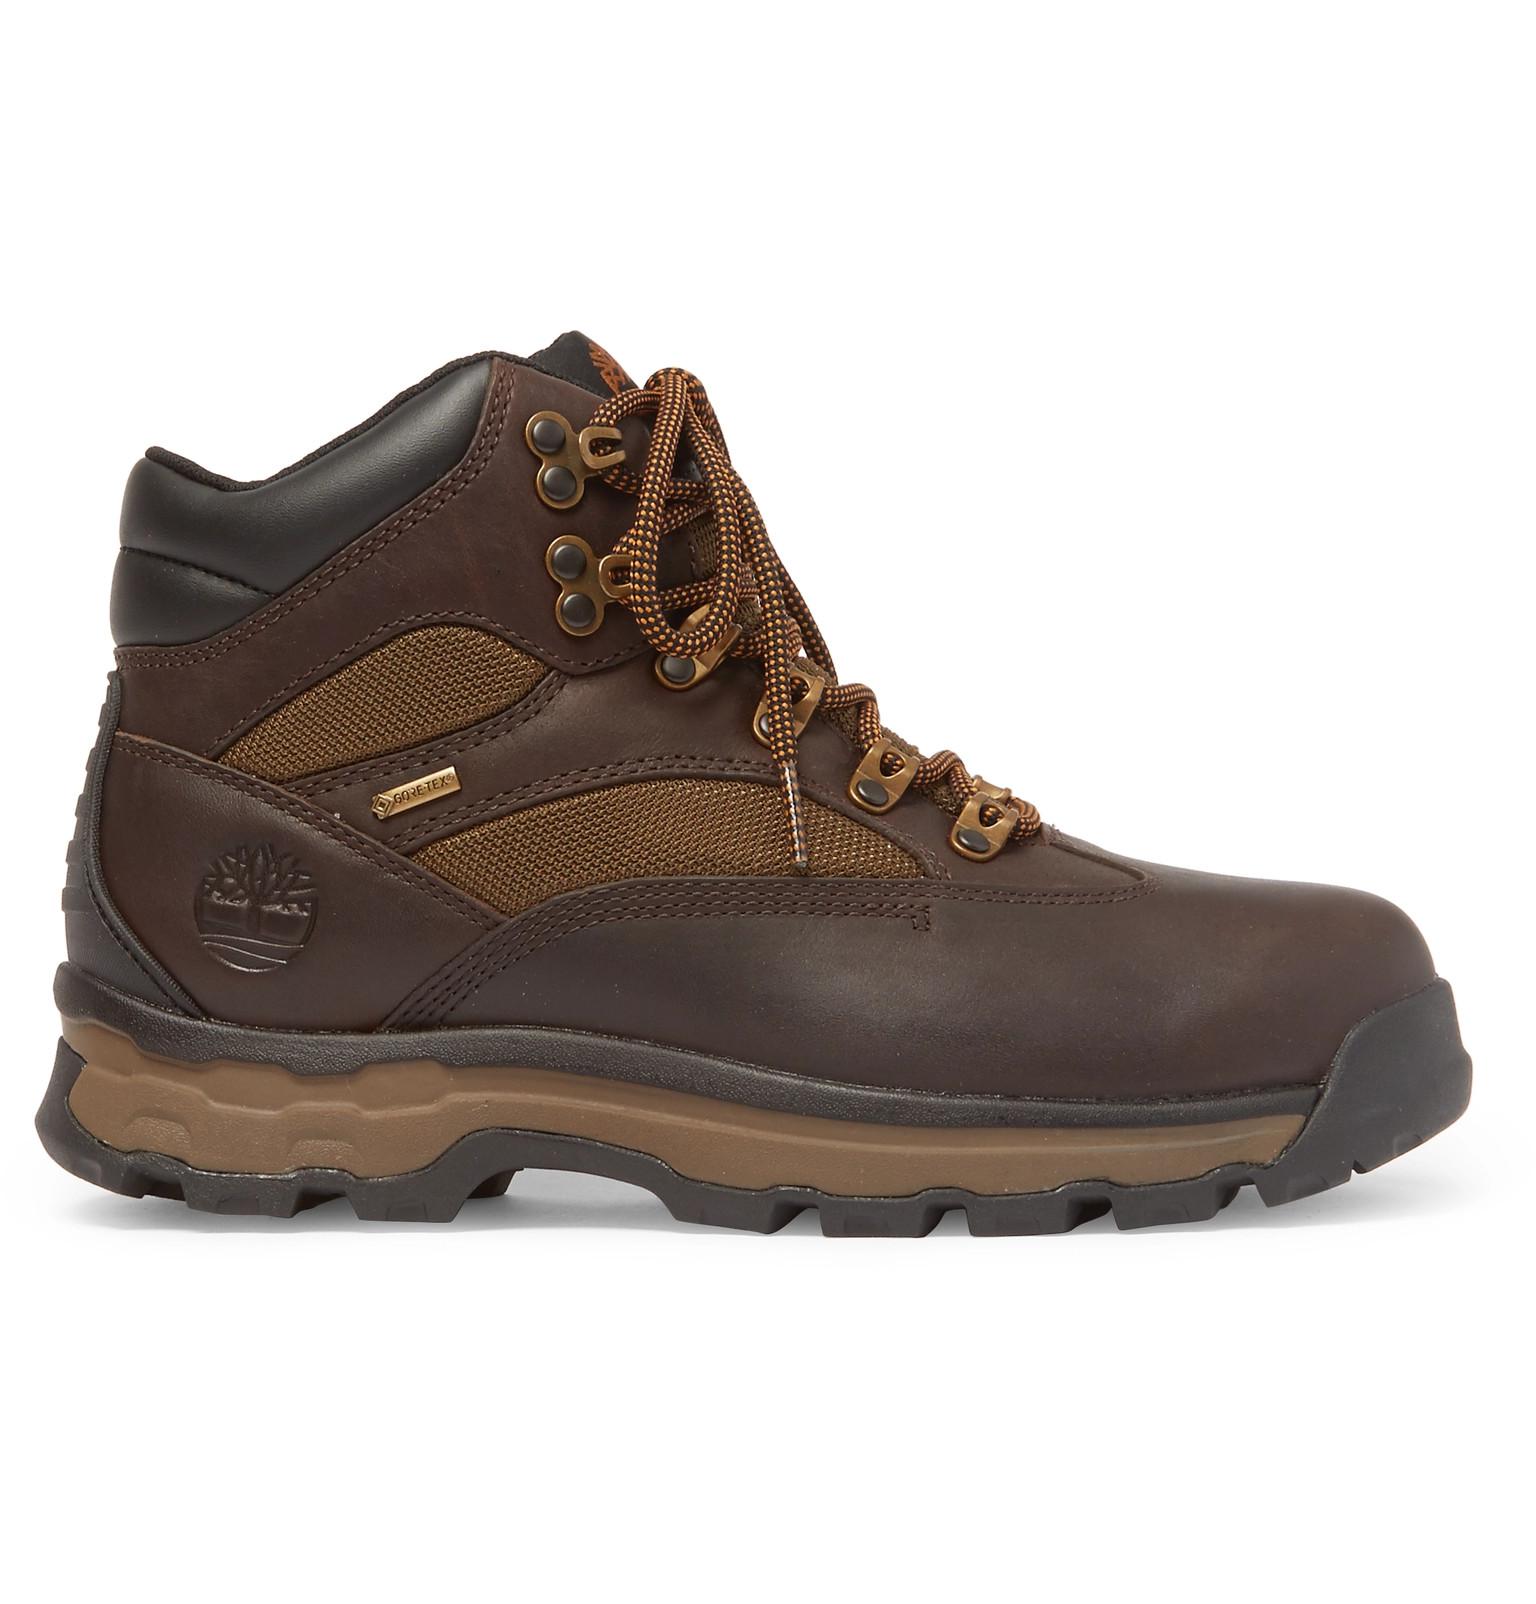 Timberland Chocorua Trail 2 Leather And Gore-tex Hiking Boots in Dark